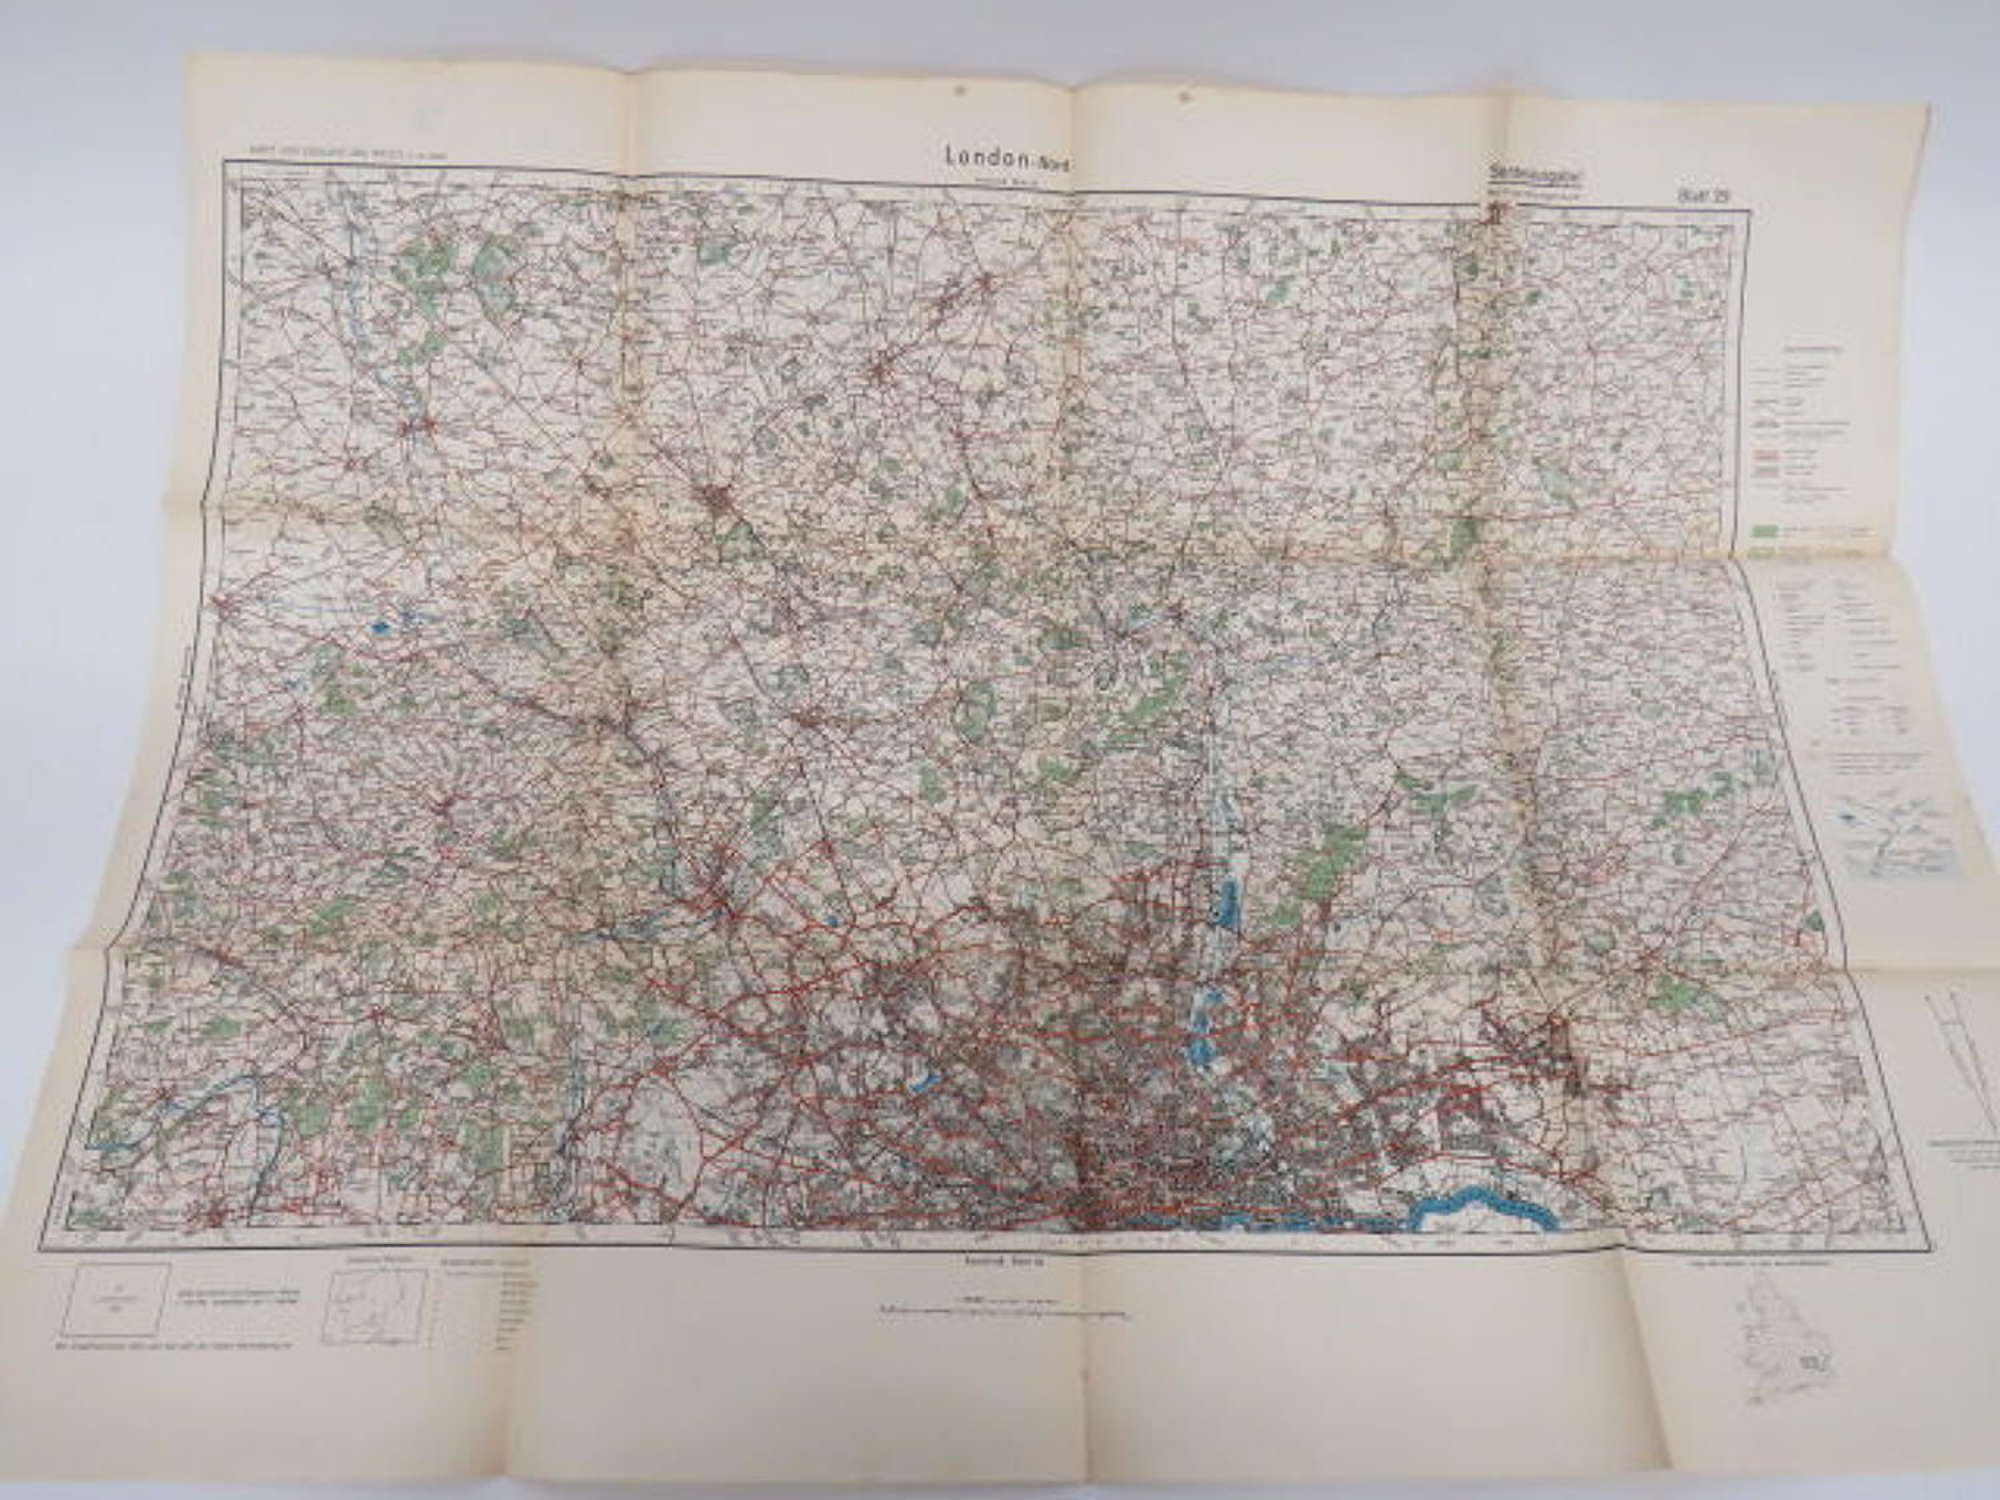 WW 2 German Invasion Map of North London